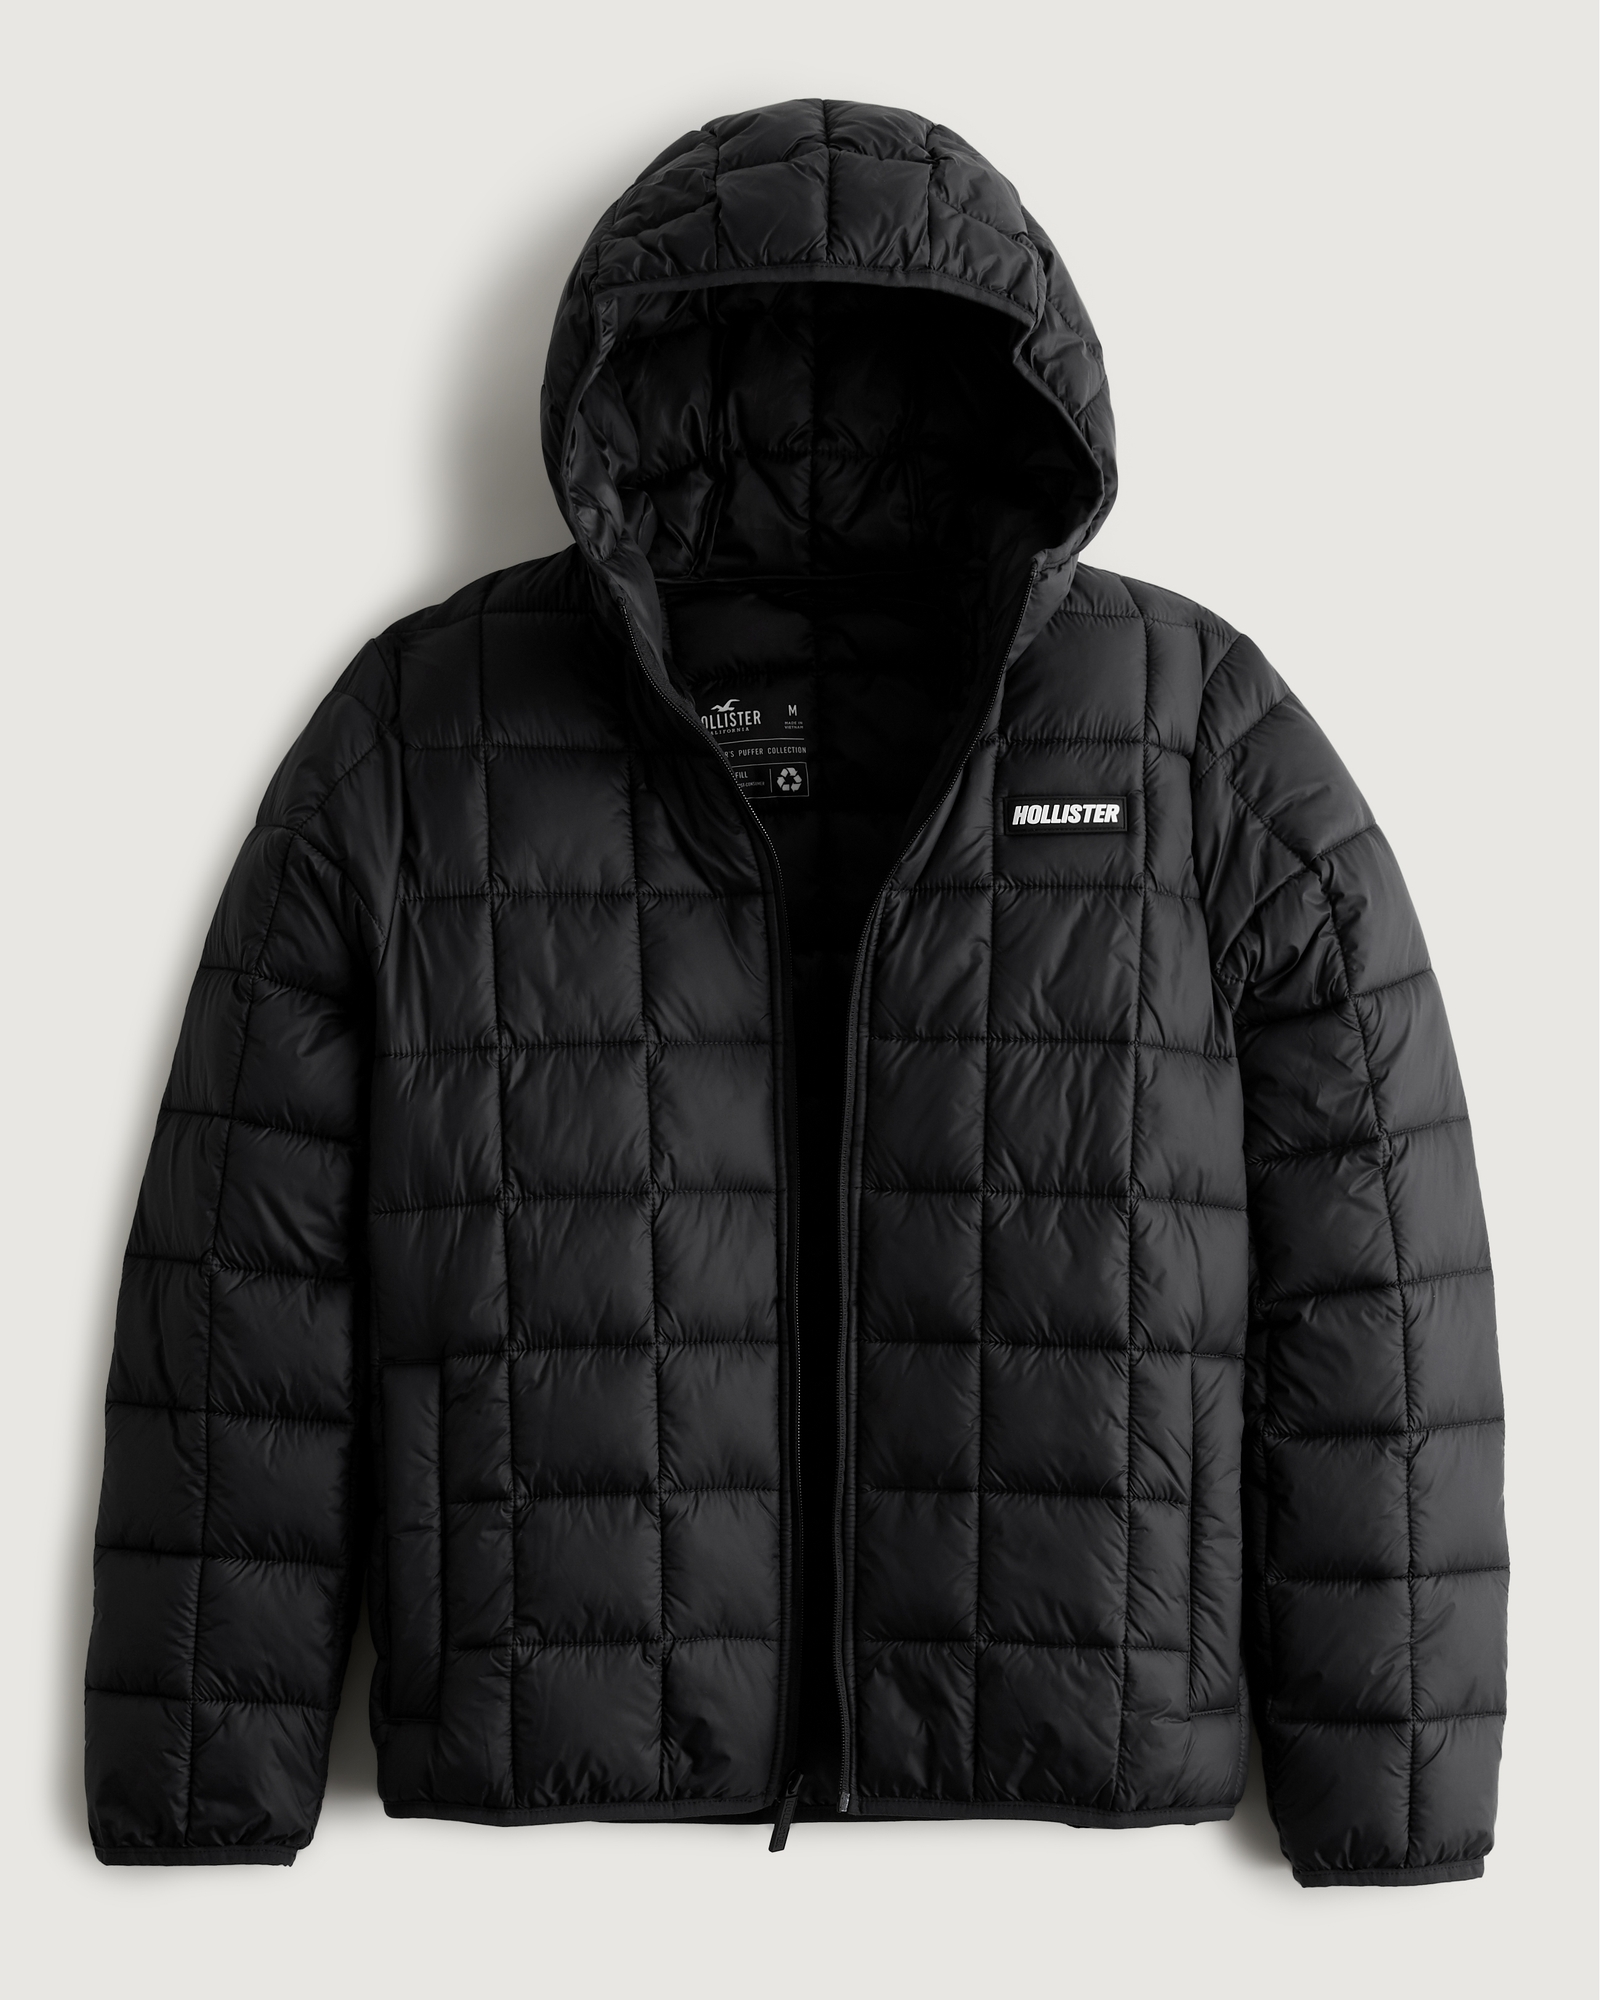 hollister winter coat  Hollister jackets, Denim utility jacket